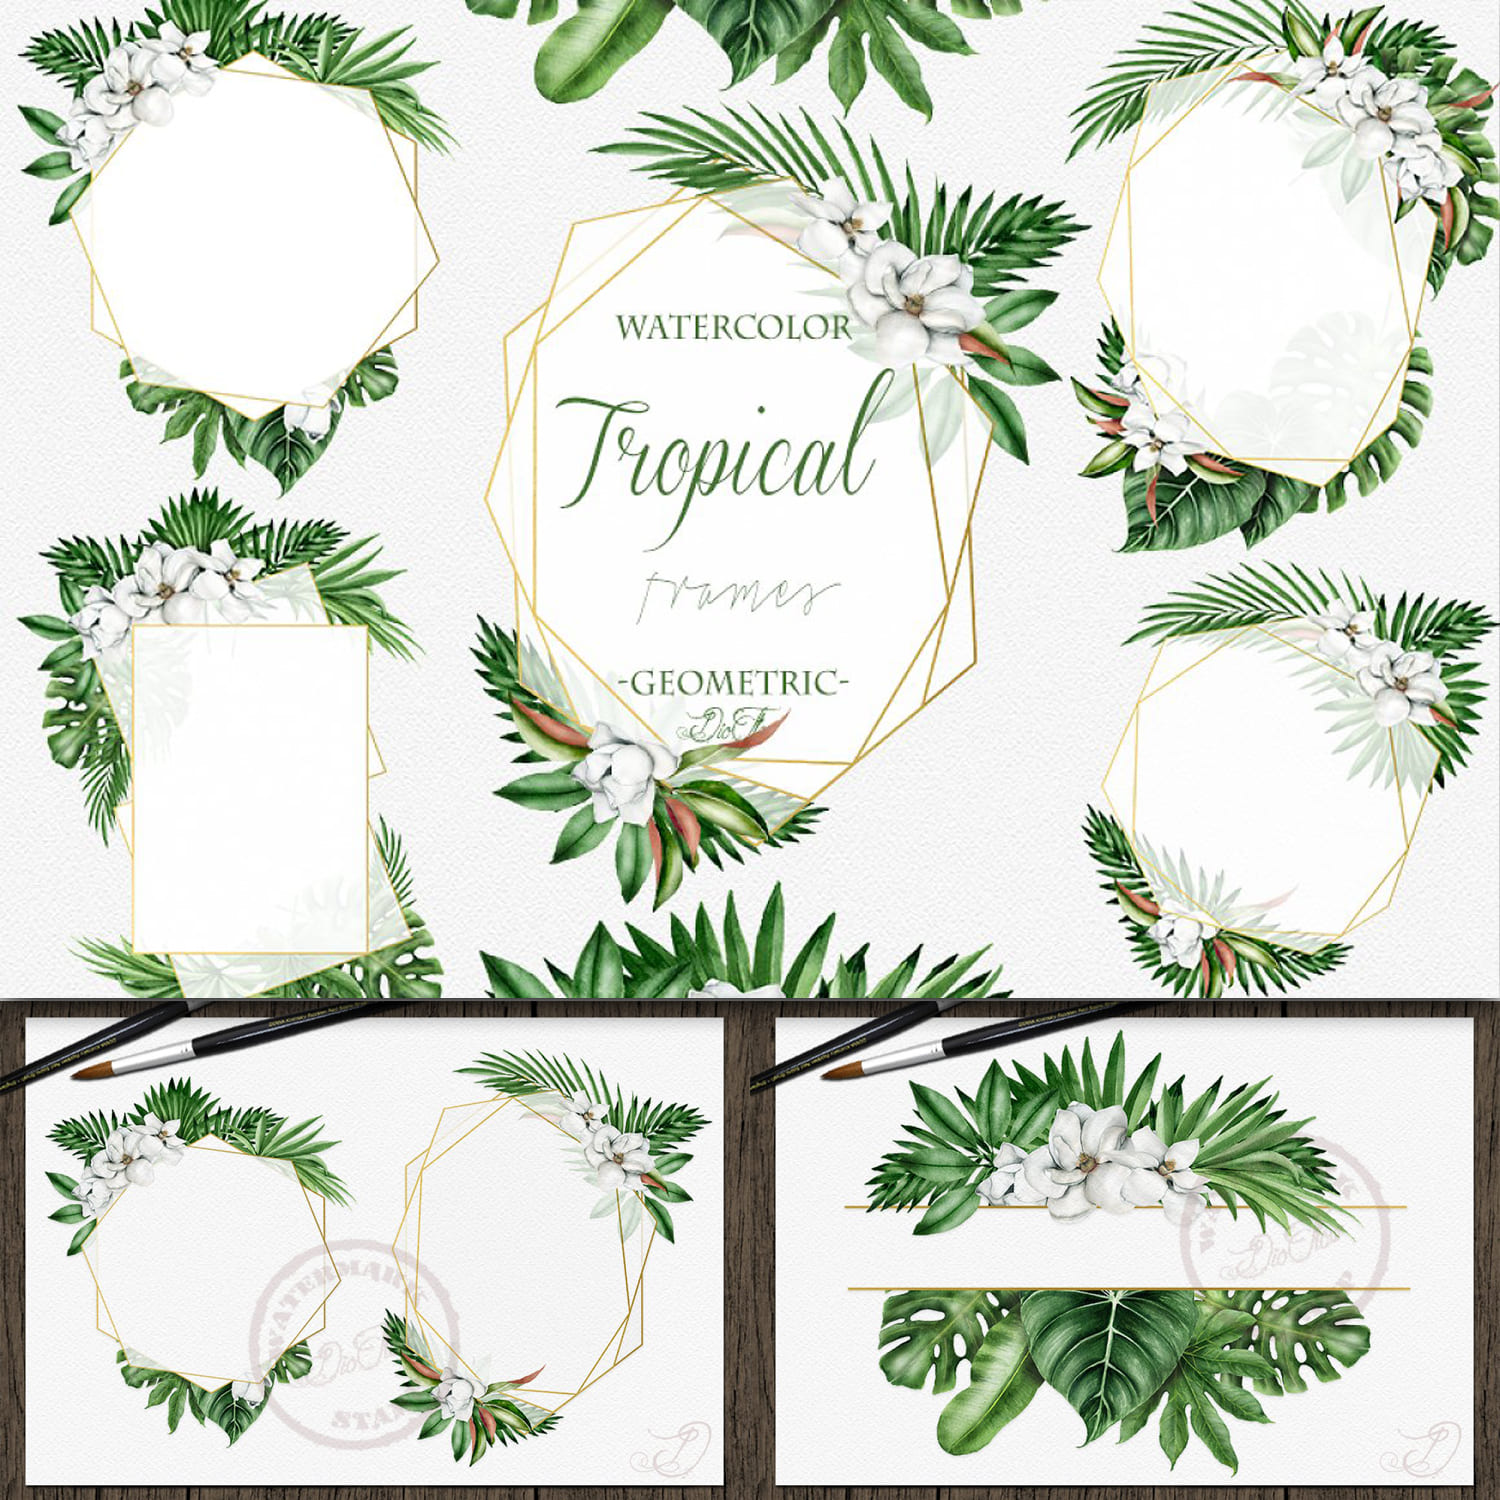 Tropical Geometric Frames Clip Art cover.